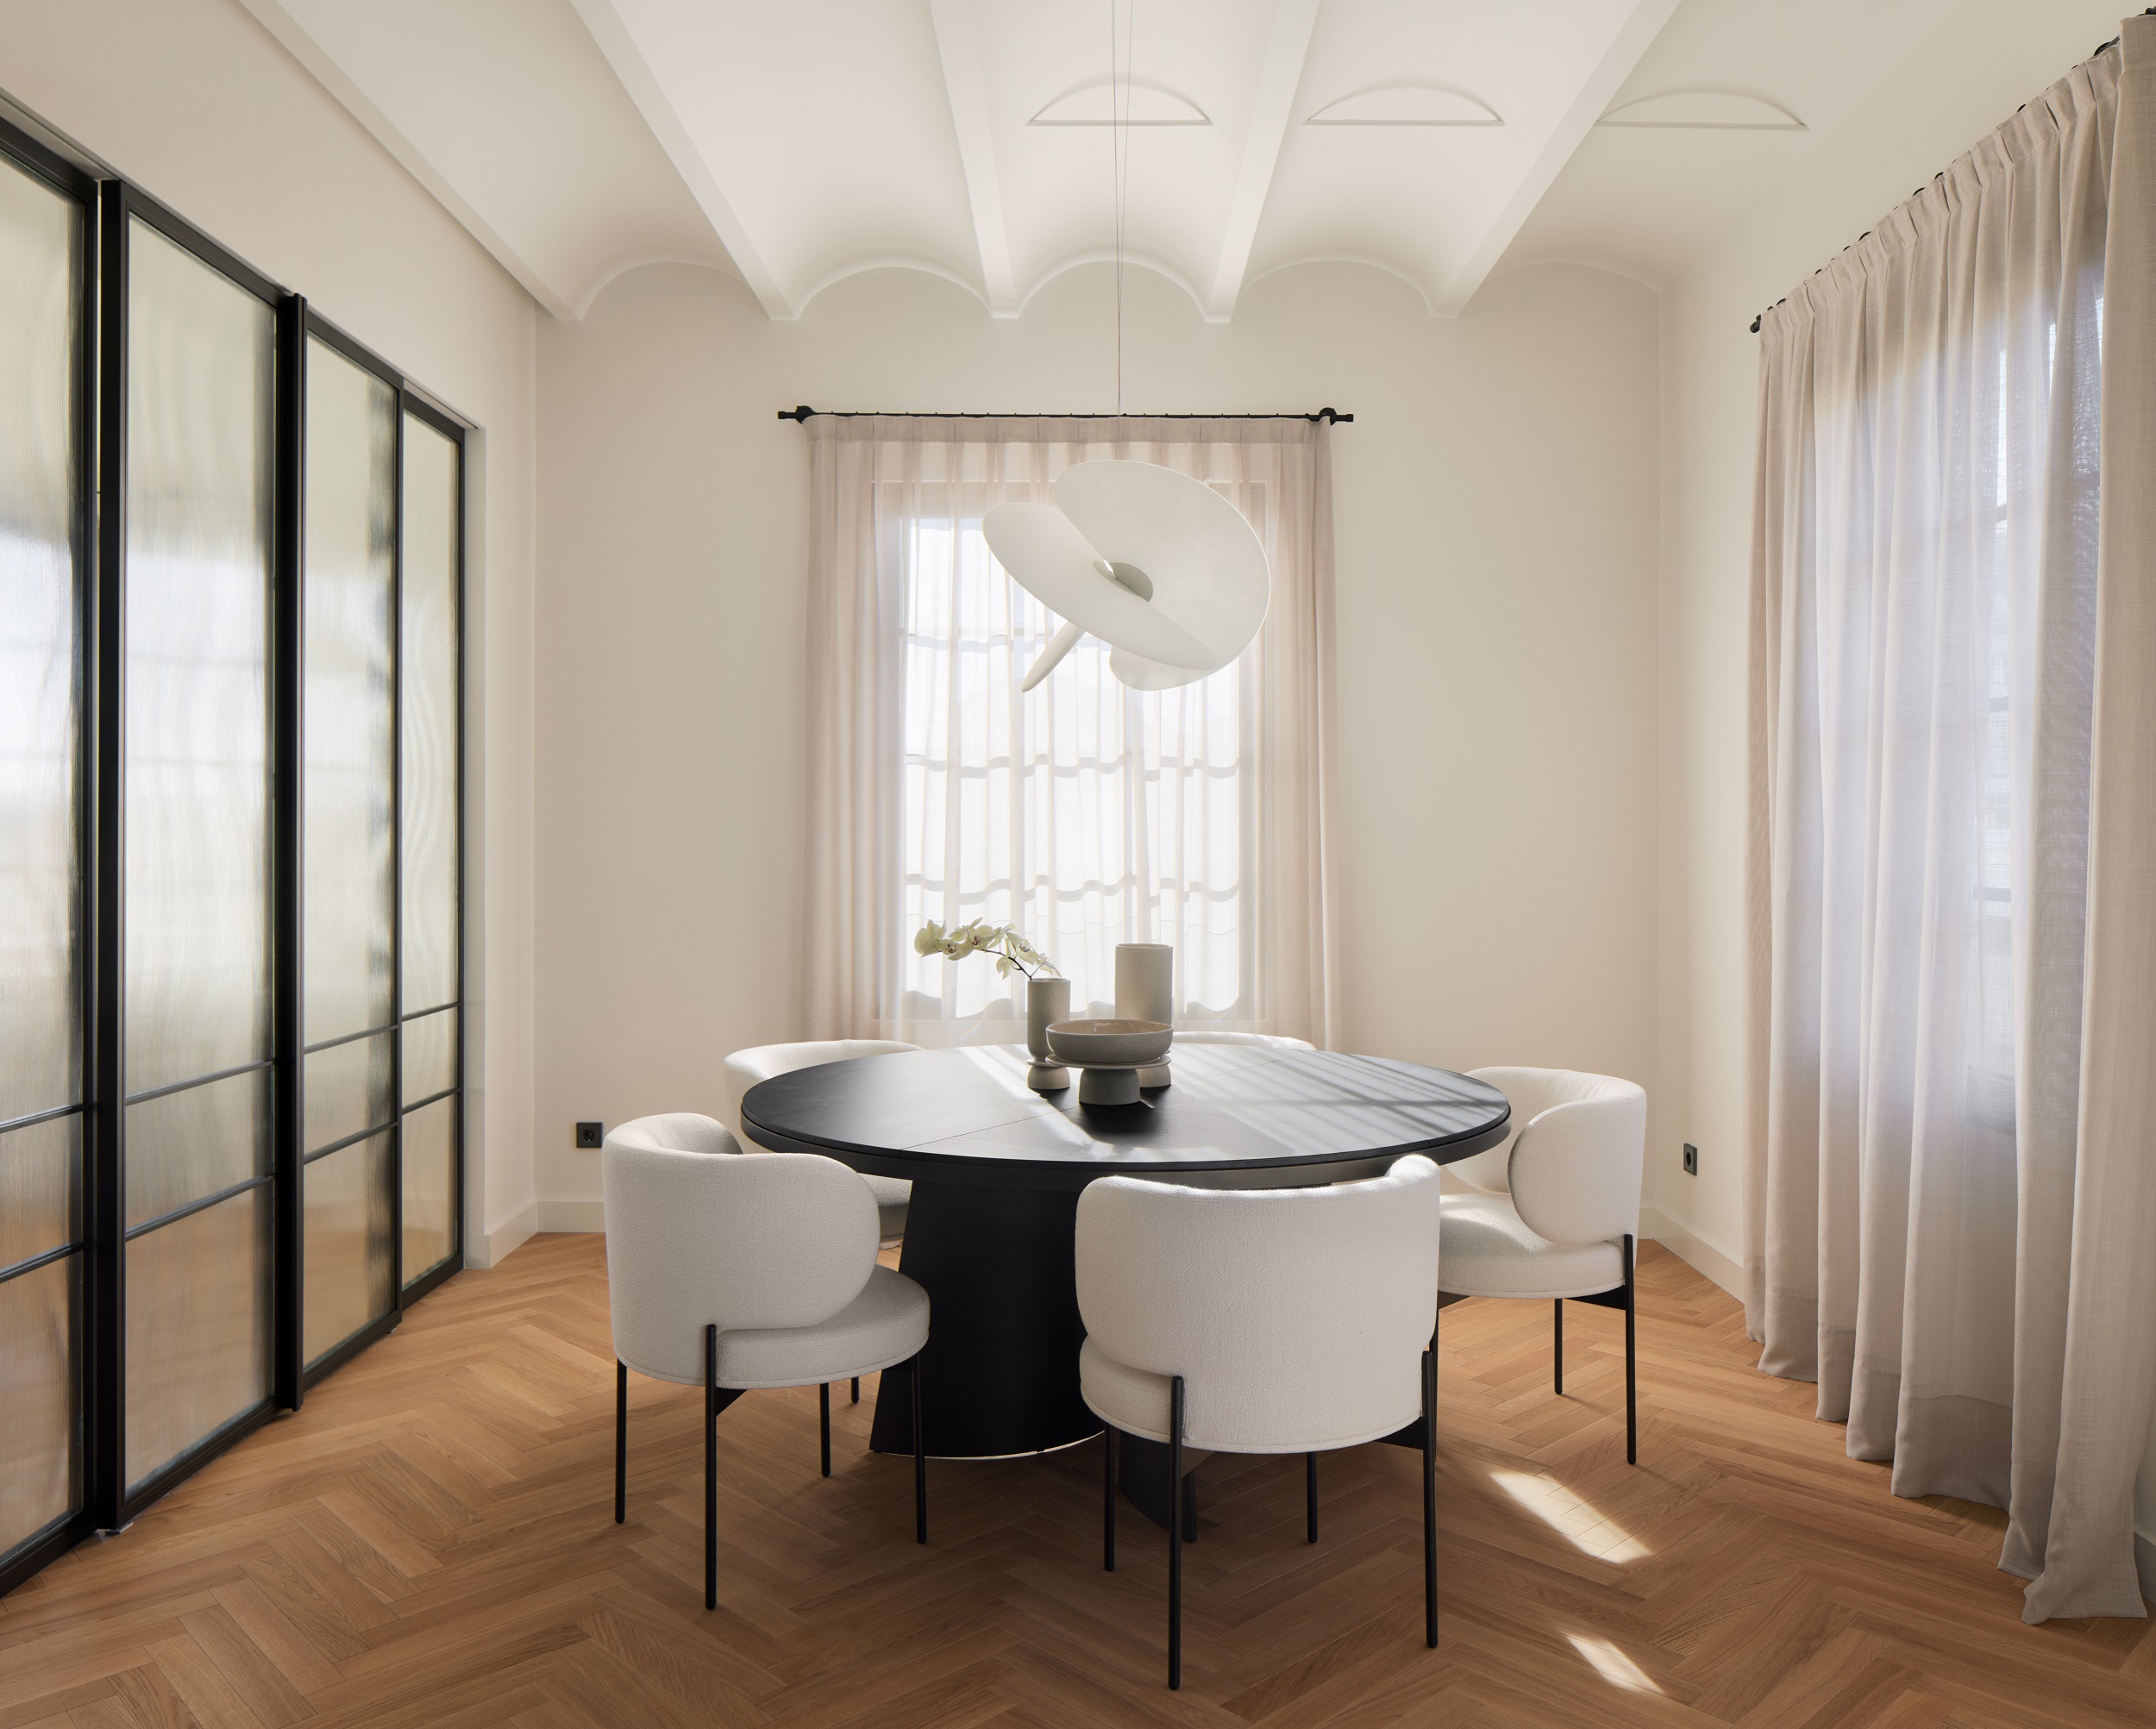 Pedralbes AV. Penthouse LUV Studio Dinning Room 2 - LUV Studio - Architecture et design - Barcelone